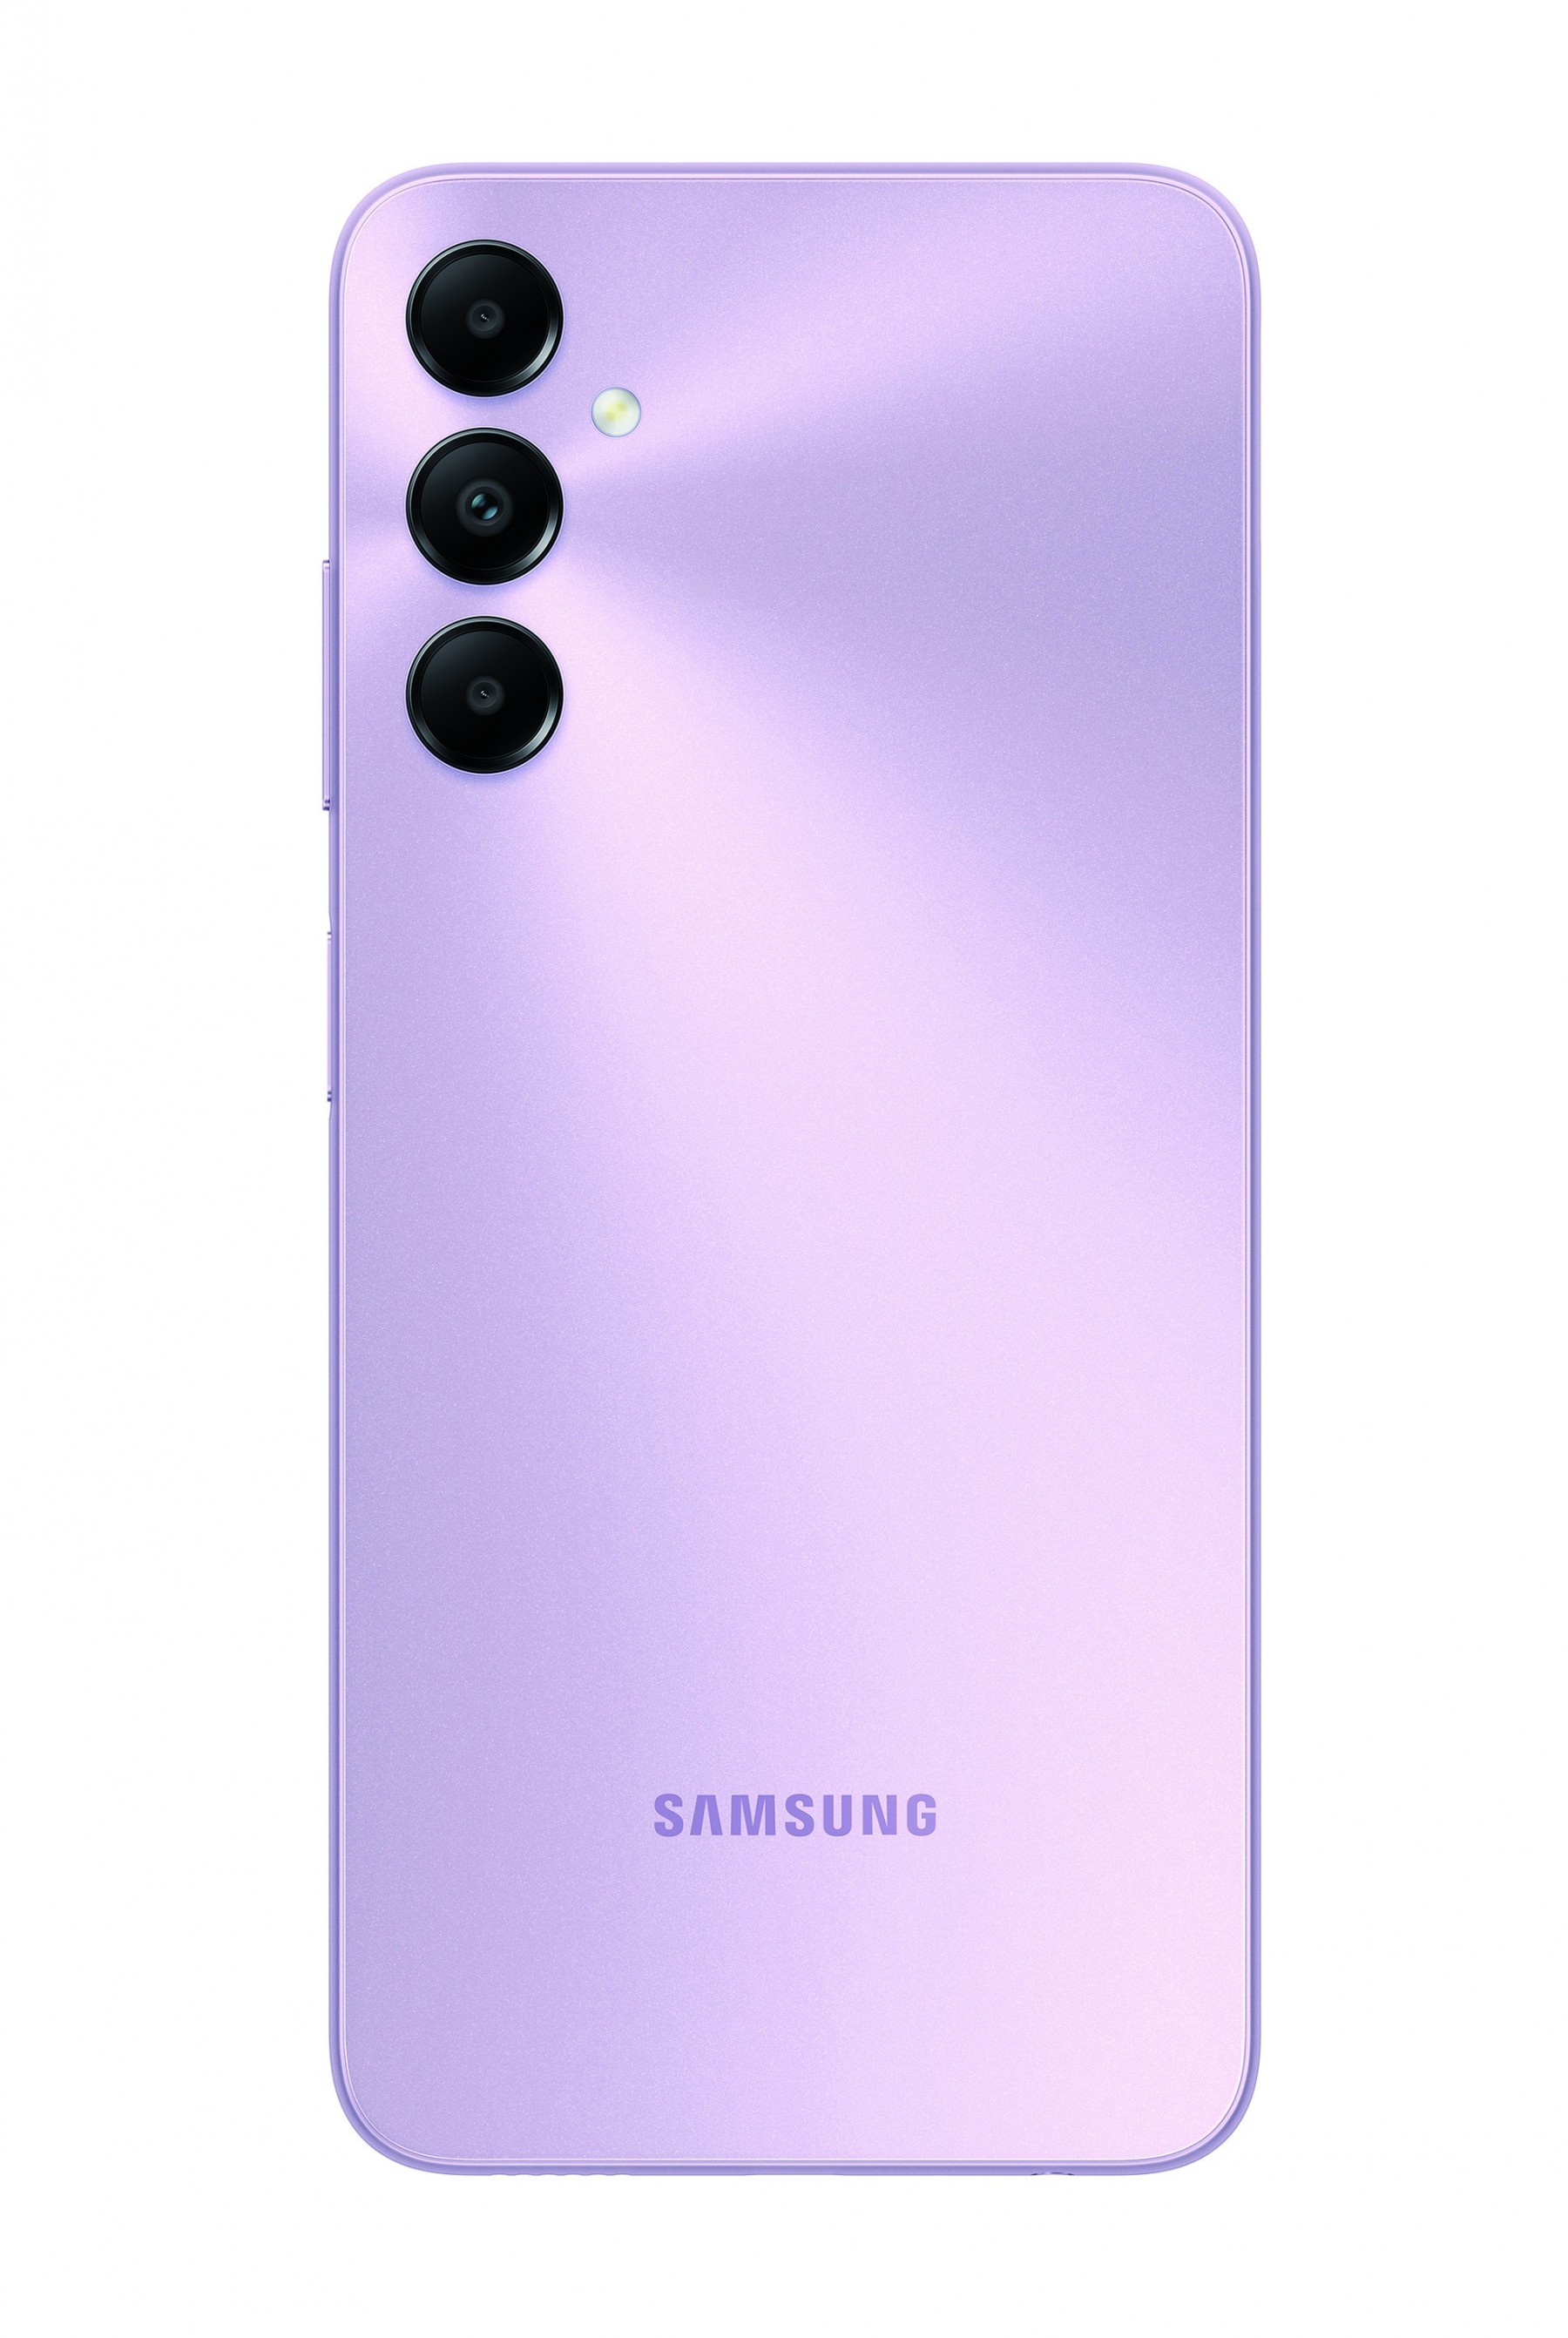 Samsung Galaxy AO5s (Telkom)